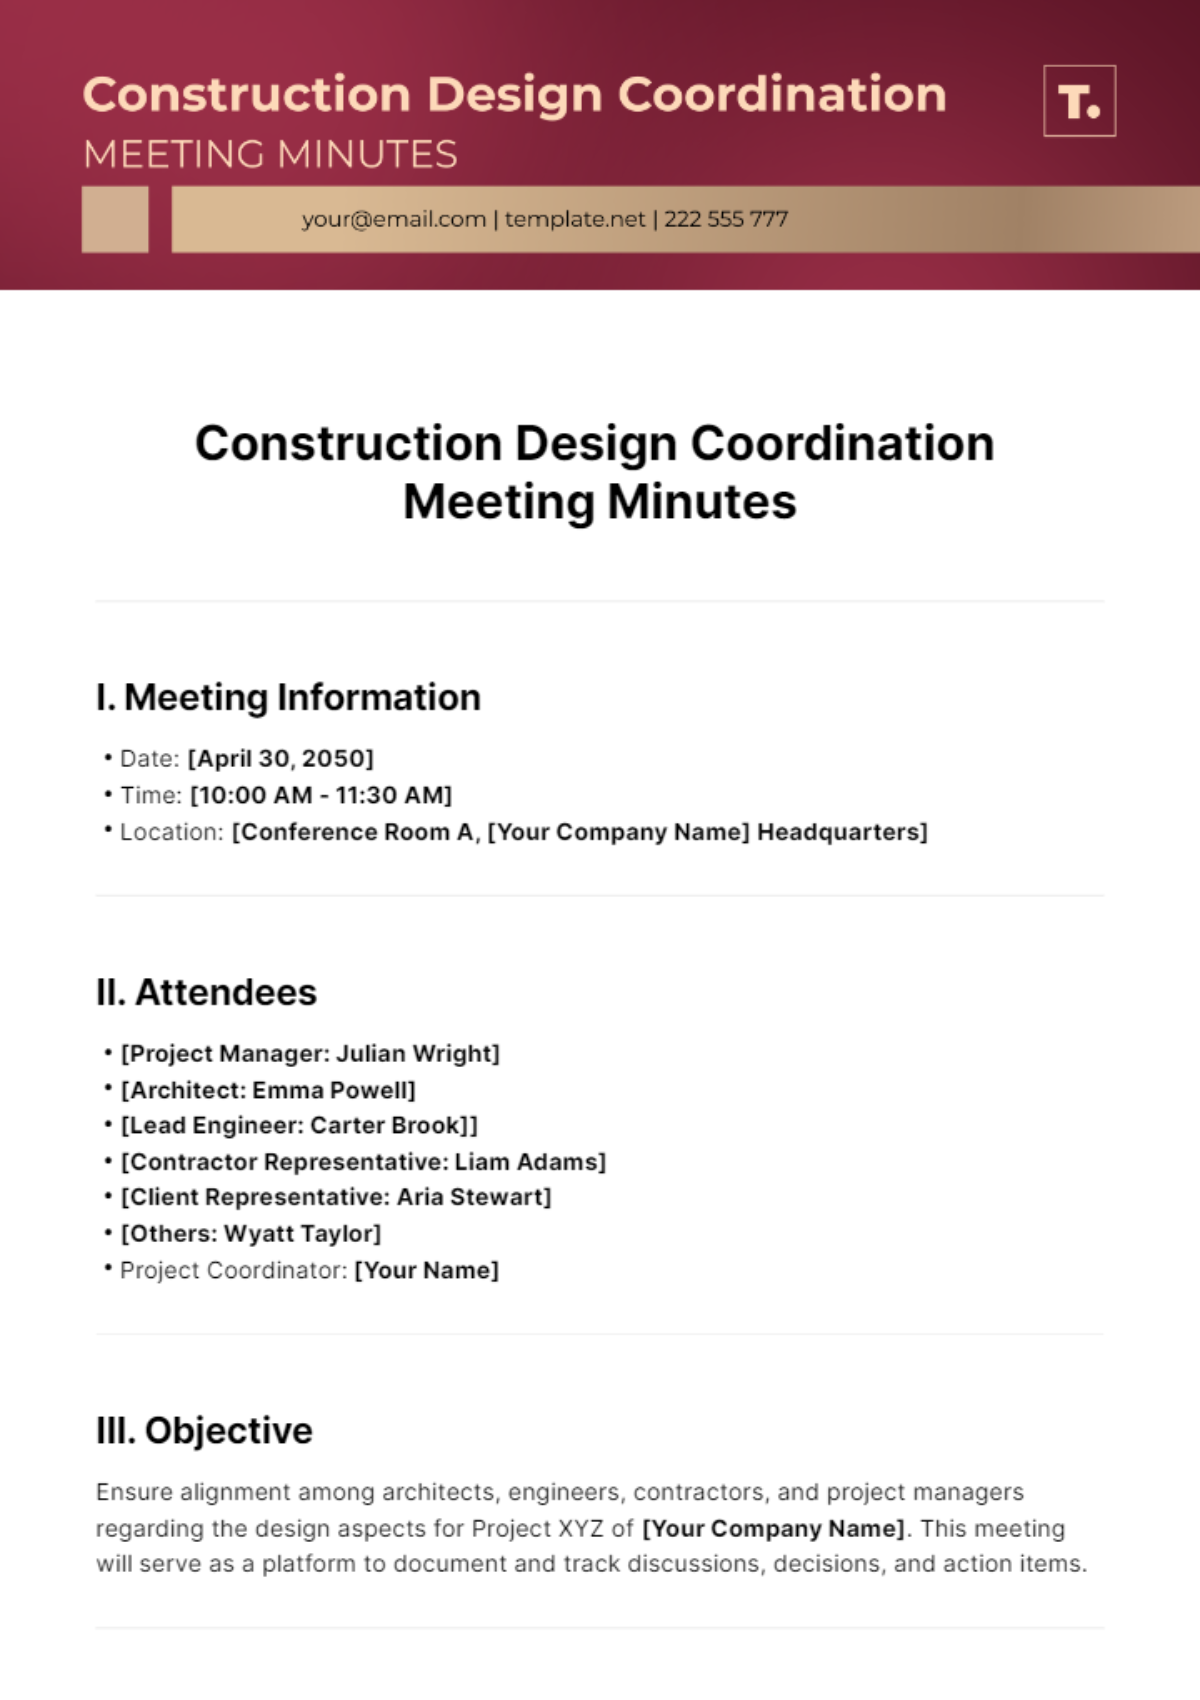 Construction Design Coordination Meeting Minutes Template